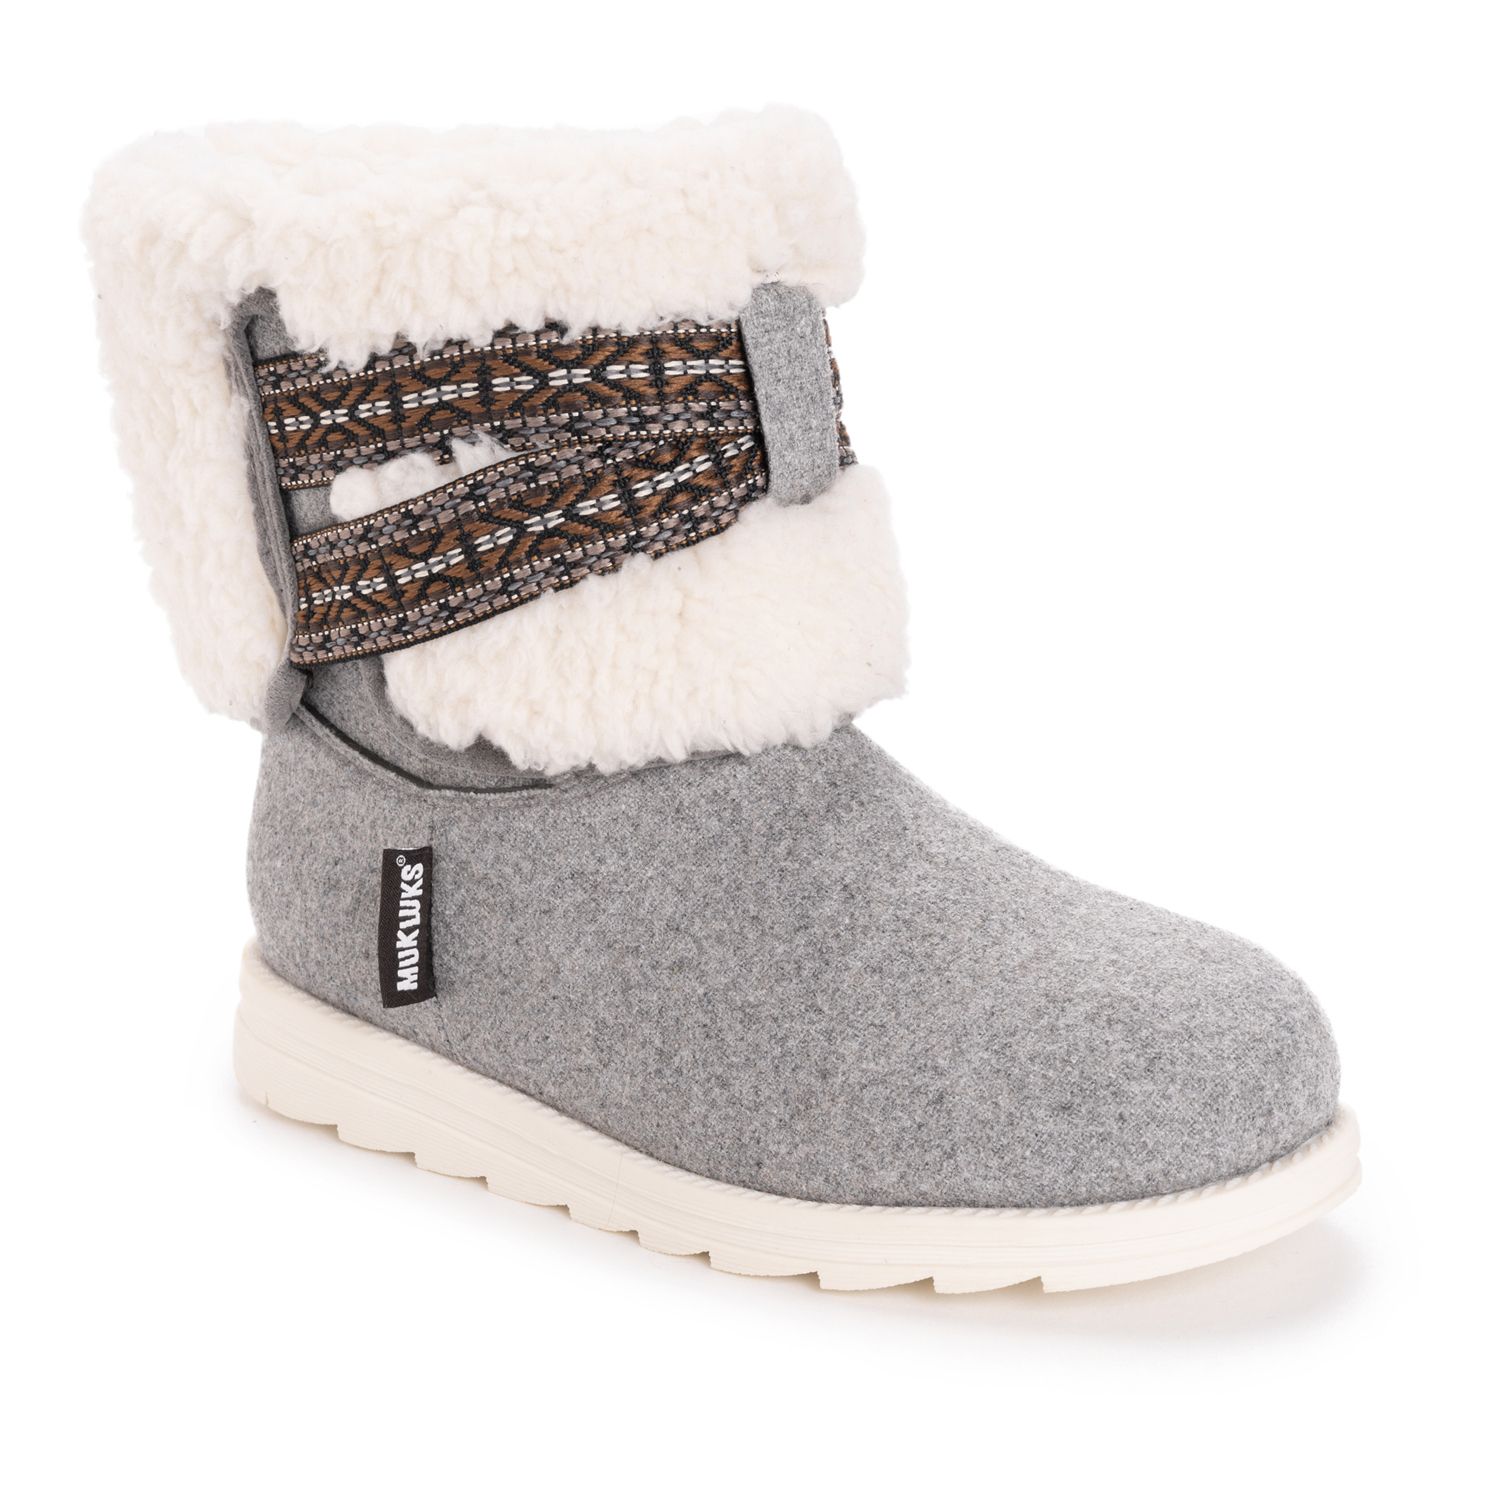 muk luks snow boots sale